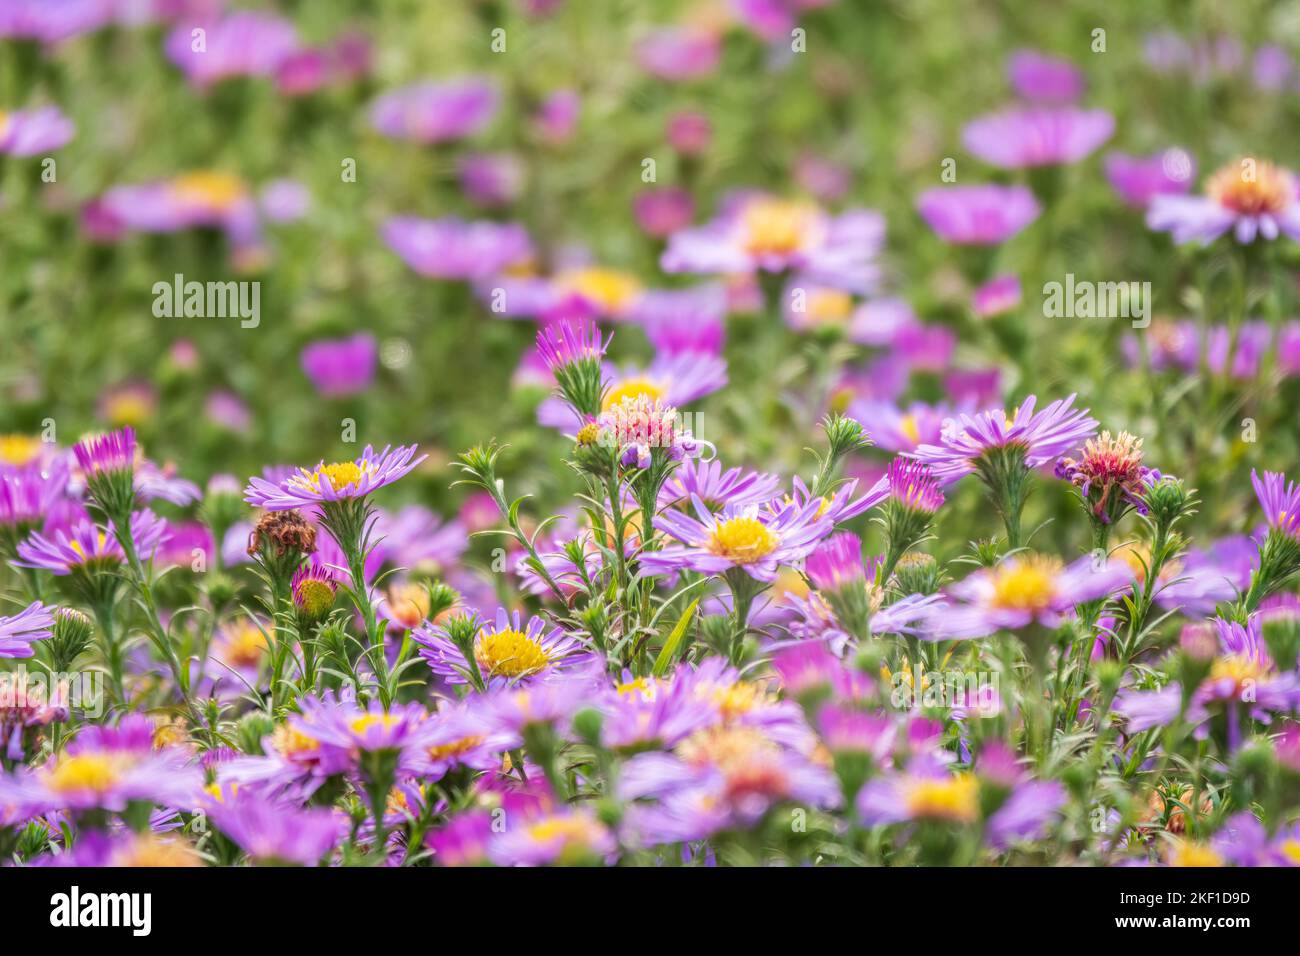 Aster Amellus, Purple Daisy. Daisies - Spring Time Flowers. Closeup of purple Michaelmas daisy flowers, Aster amellus Rudolf goethe, in a garden. Beau Stock Photo